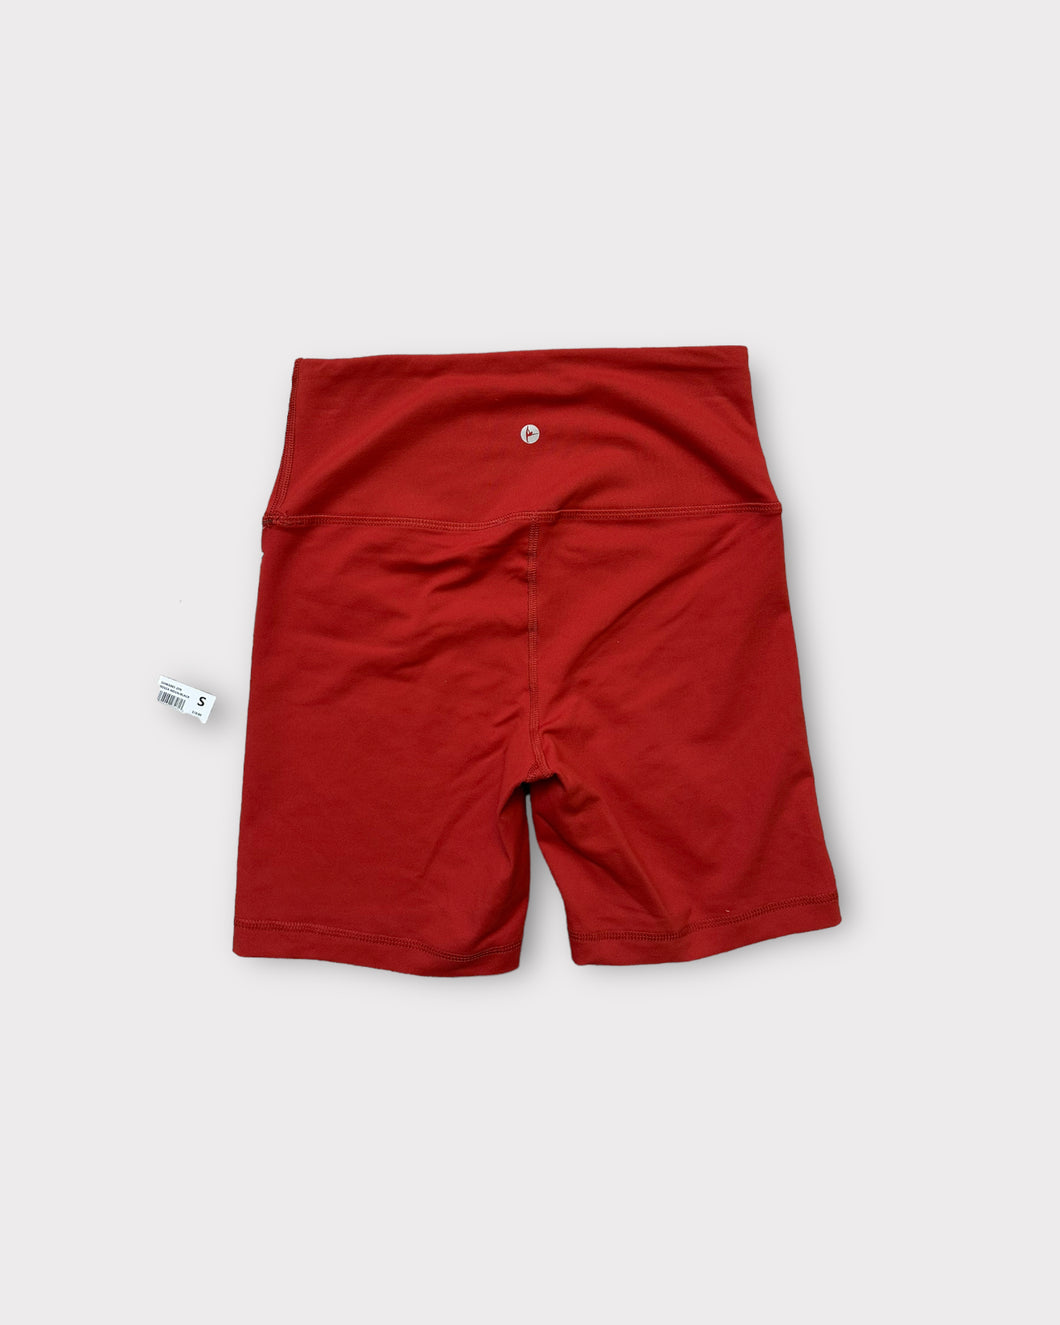 90 Degree NWT Red Biker Shorts (S)